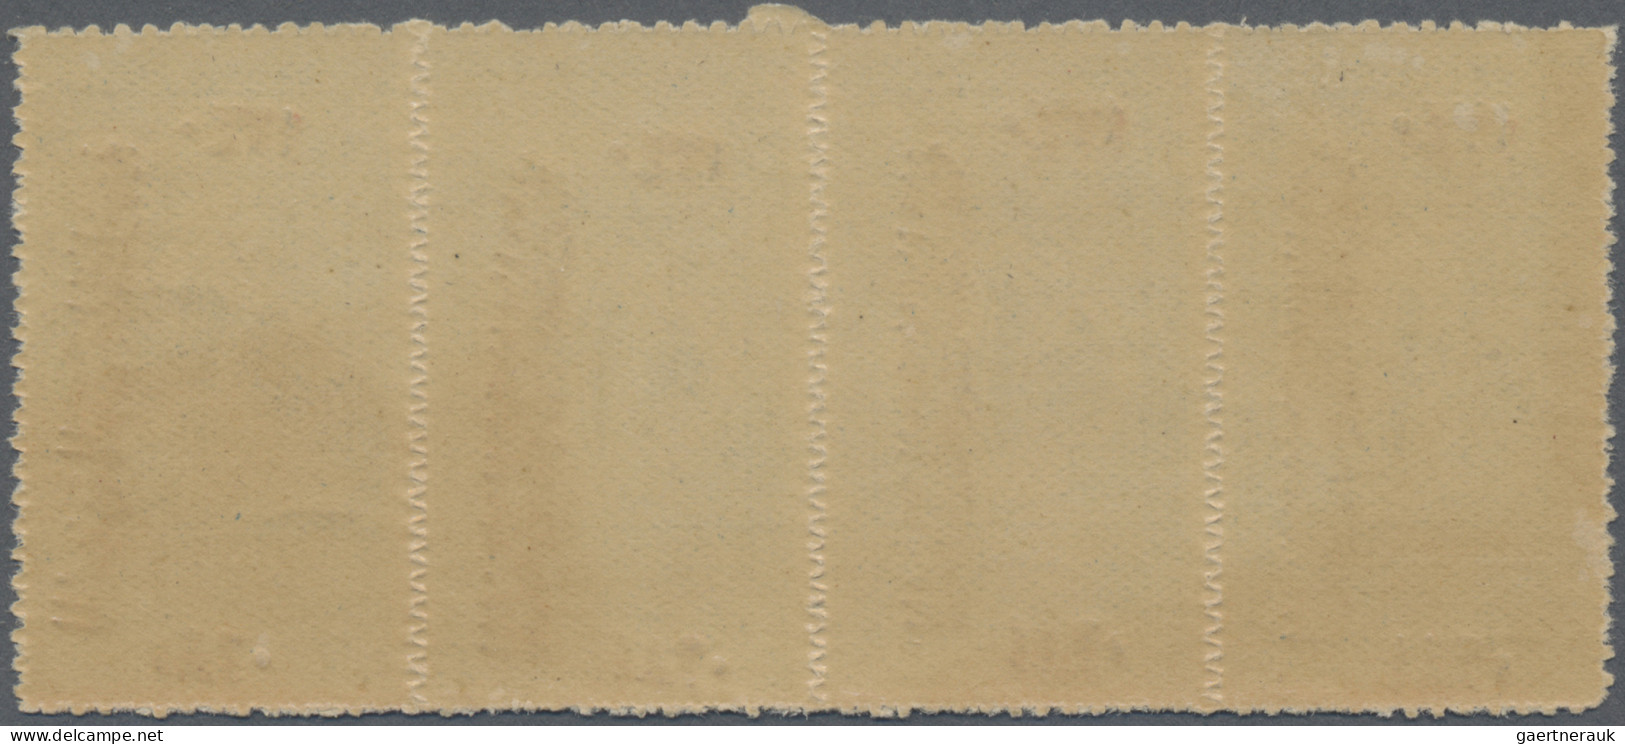 Saudi Arabia - Postage Dues: 1921 Hejaz Postage Due 1pi. Blue, Zig-zag Roulette - Arabia Saudita